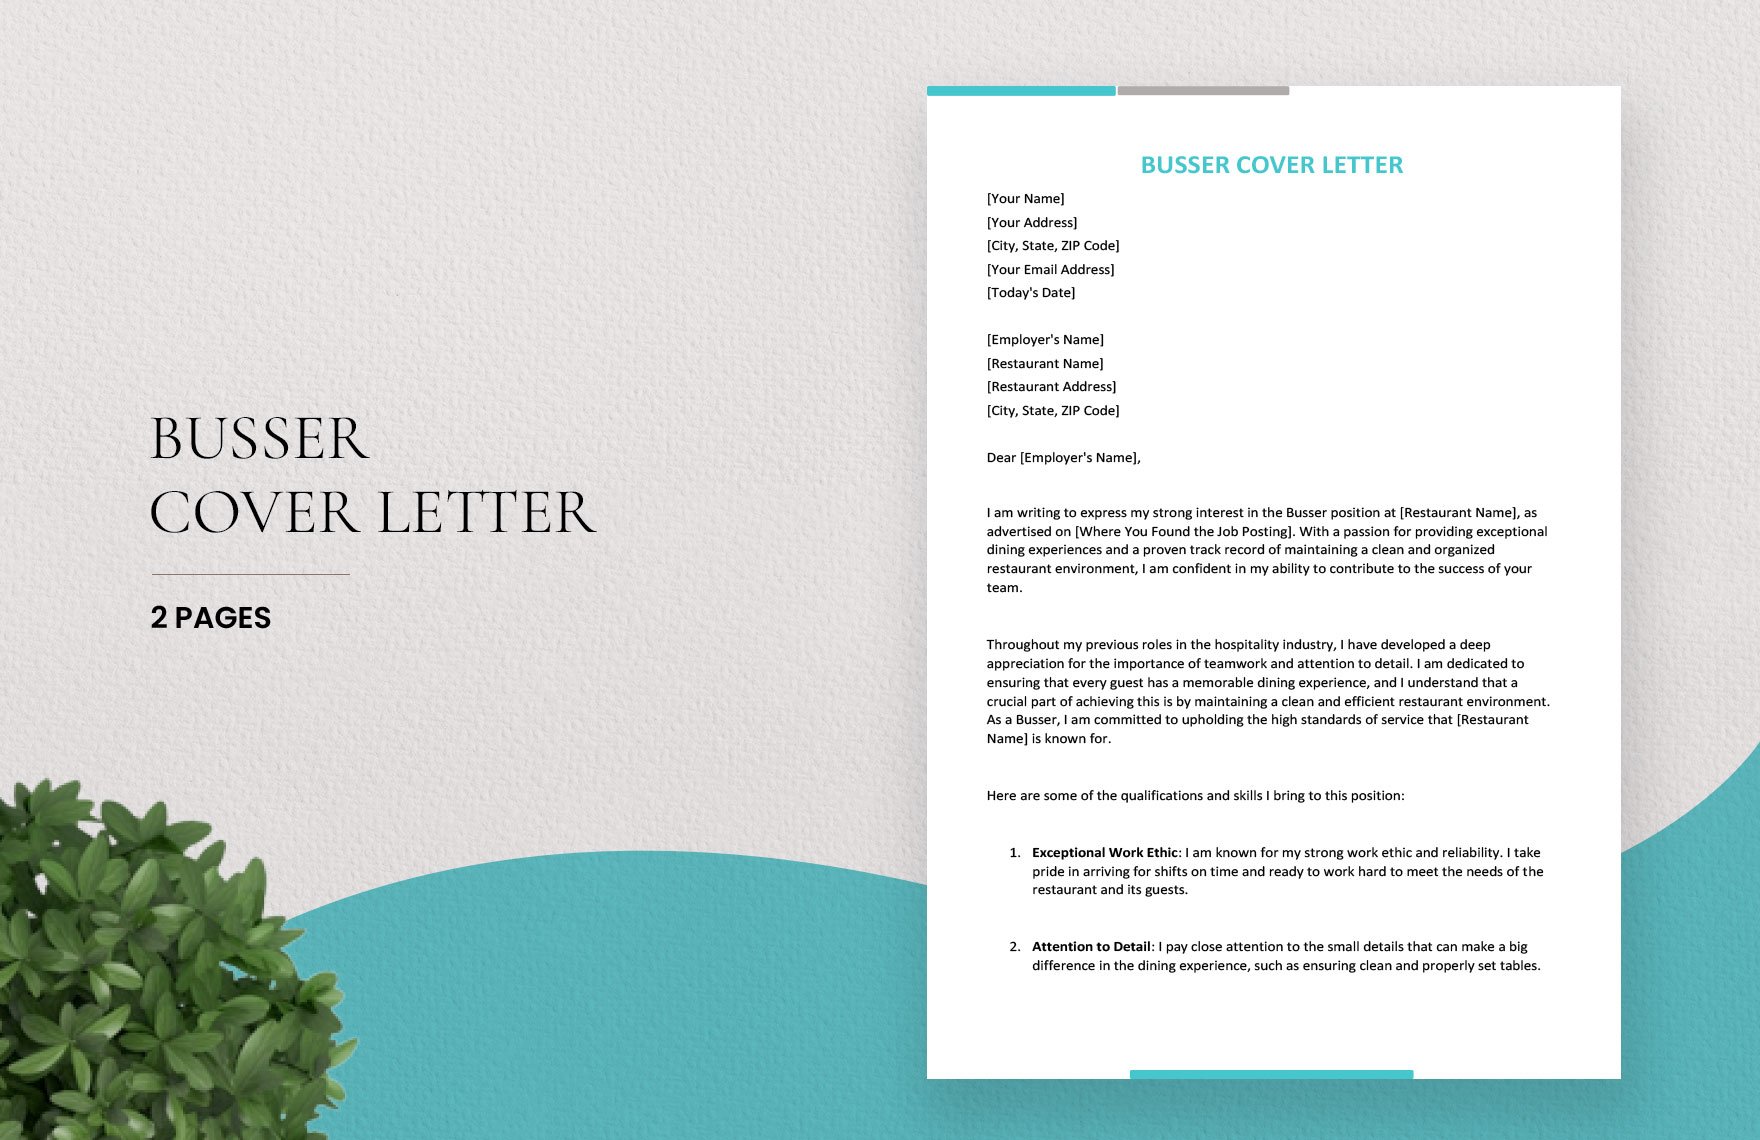 Busser Cover Letter in Word, Google Docs